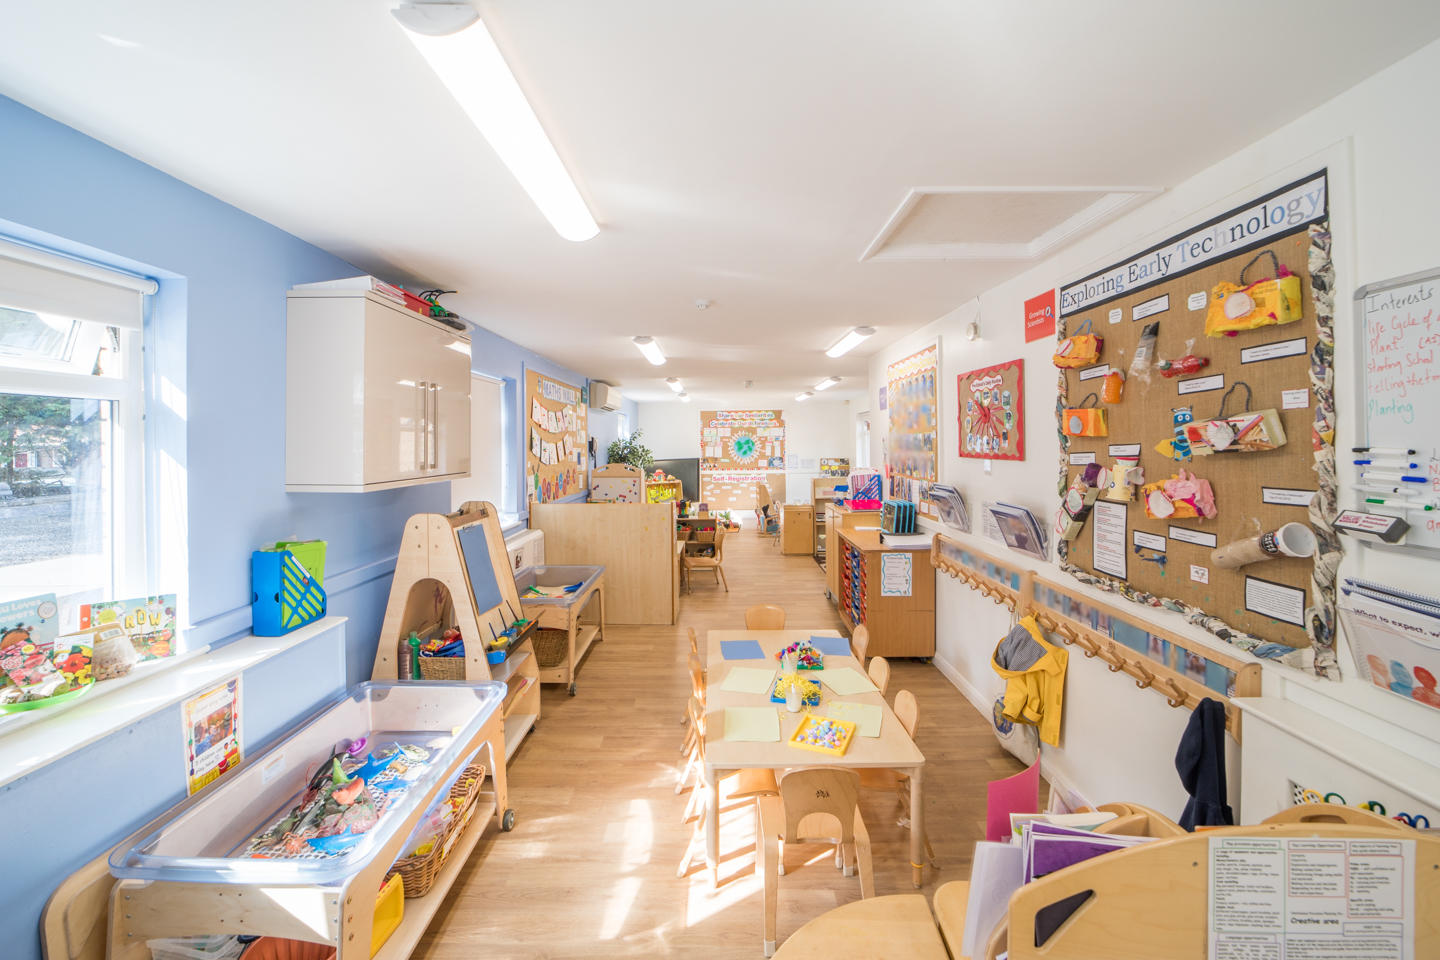 Images Bright Horizons Peckham Rye Day Nursery and Preschool